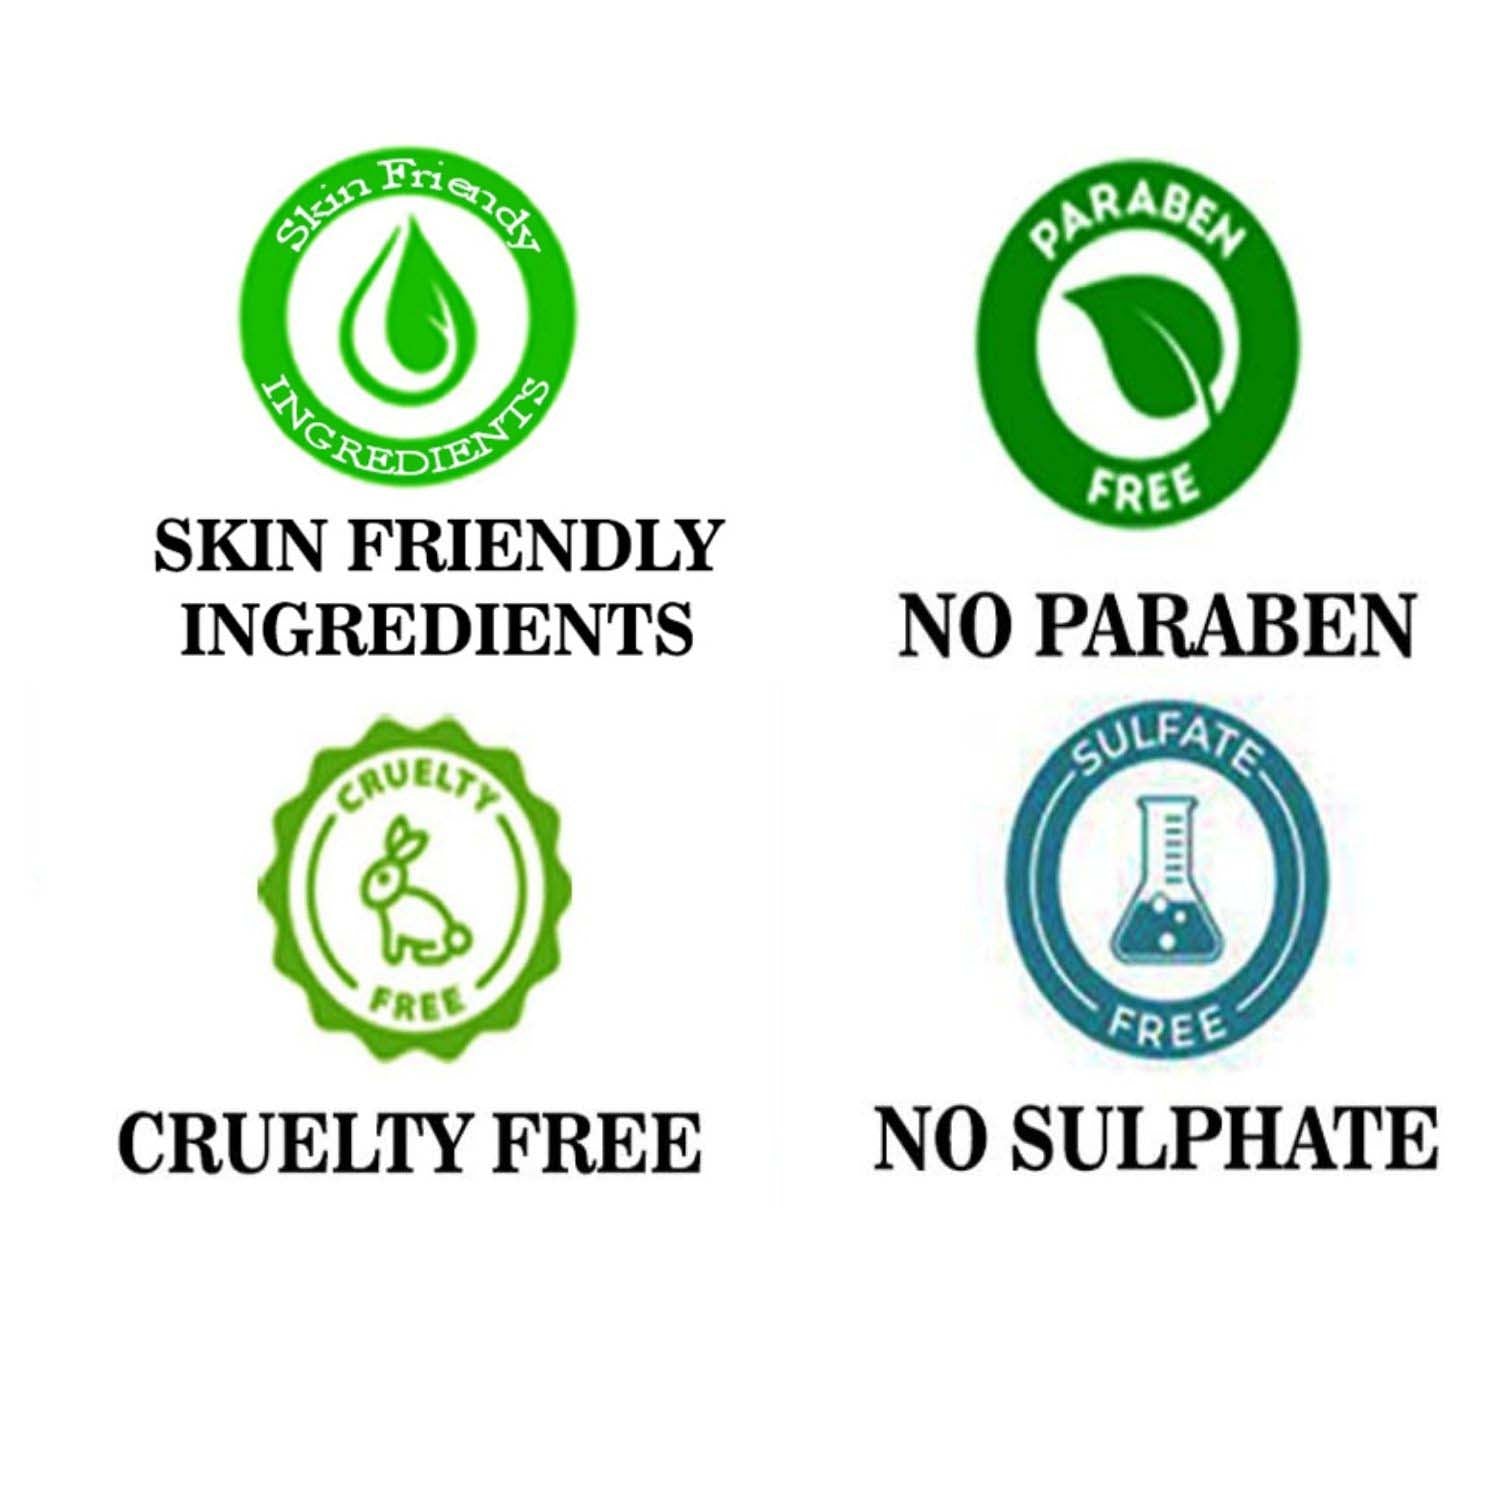 urbaano herbal skinglowing & nourishing facial kit is sulphate, paraben, cruelty free. it is safe & skin friendly